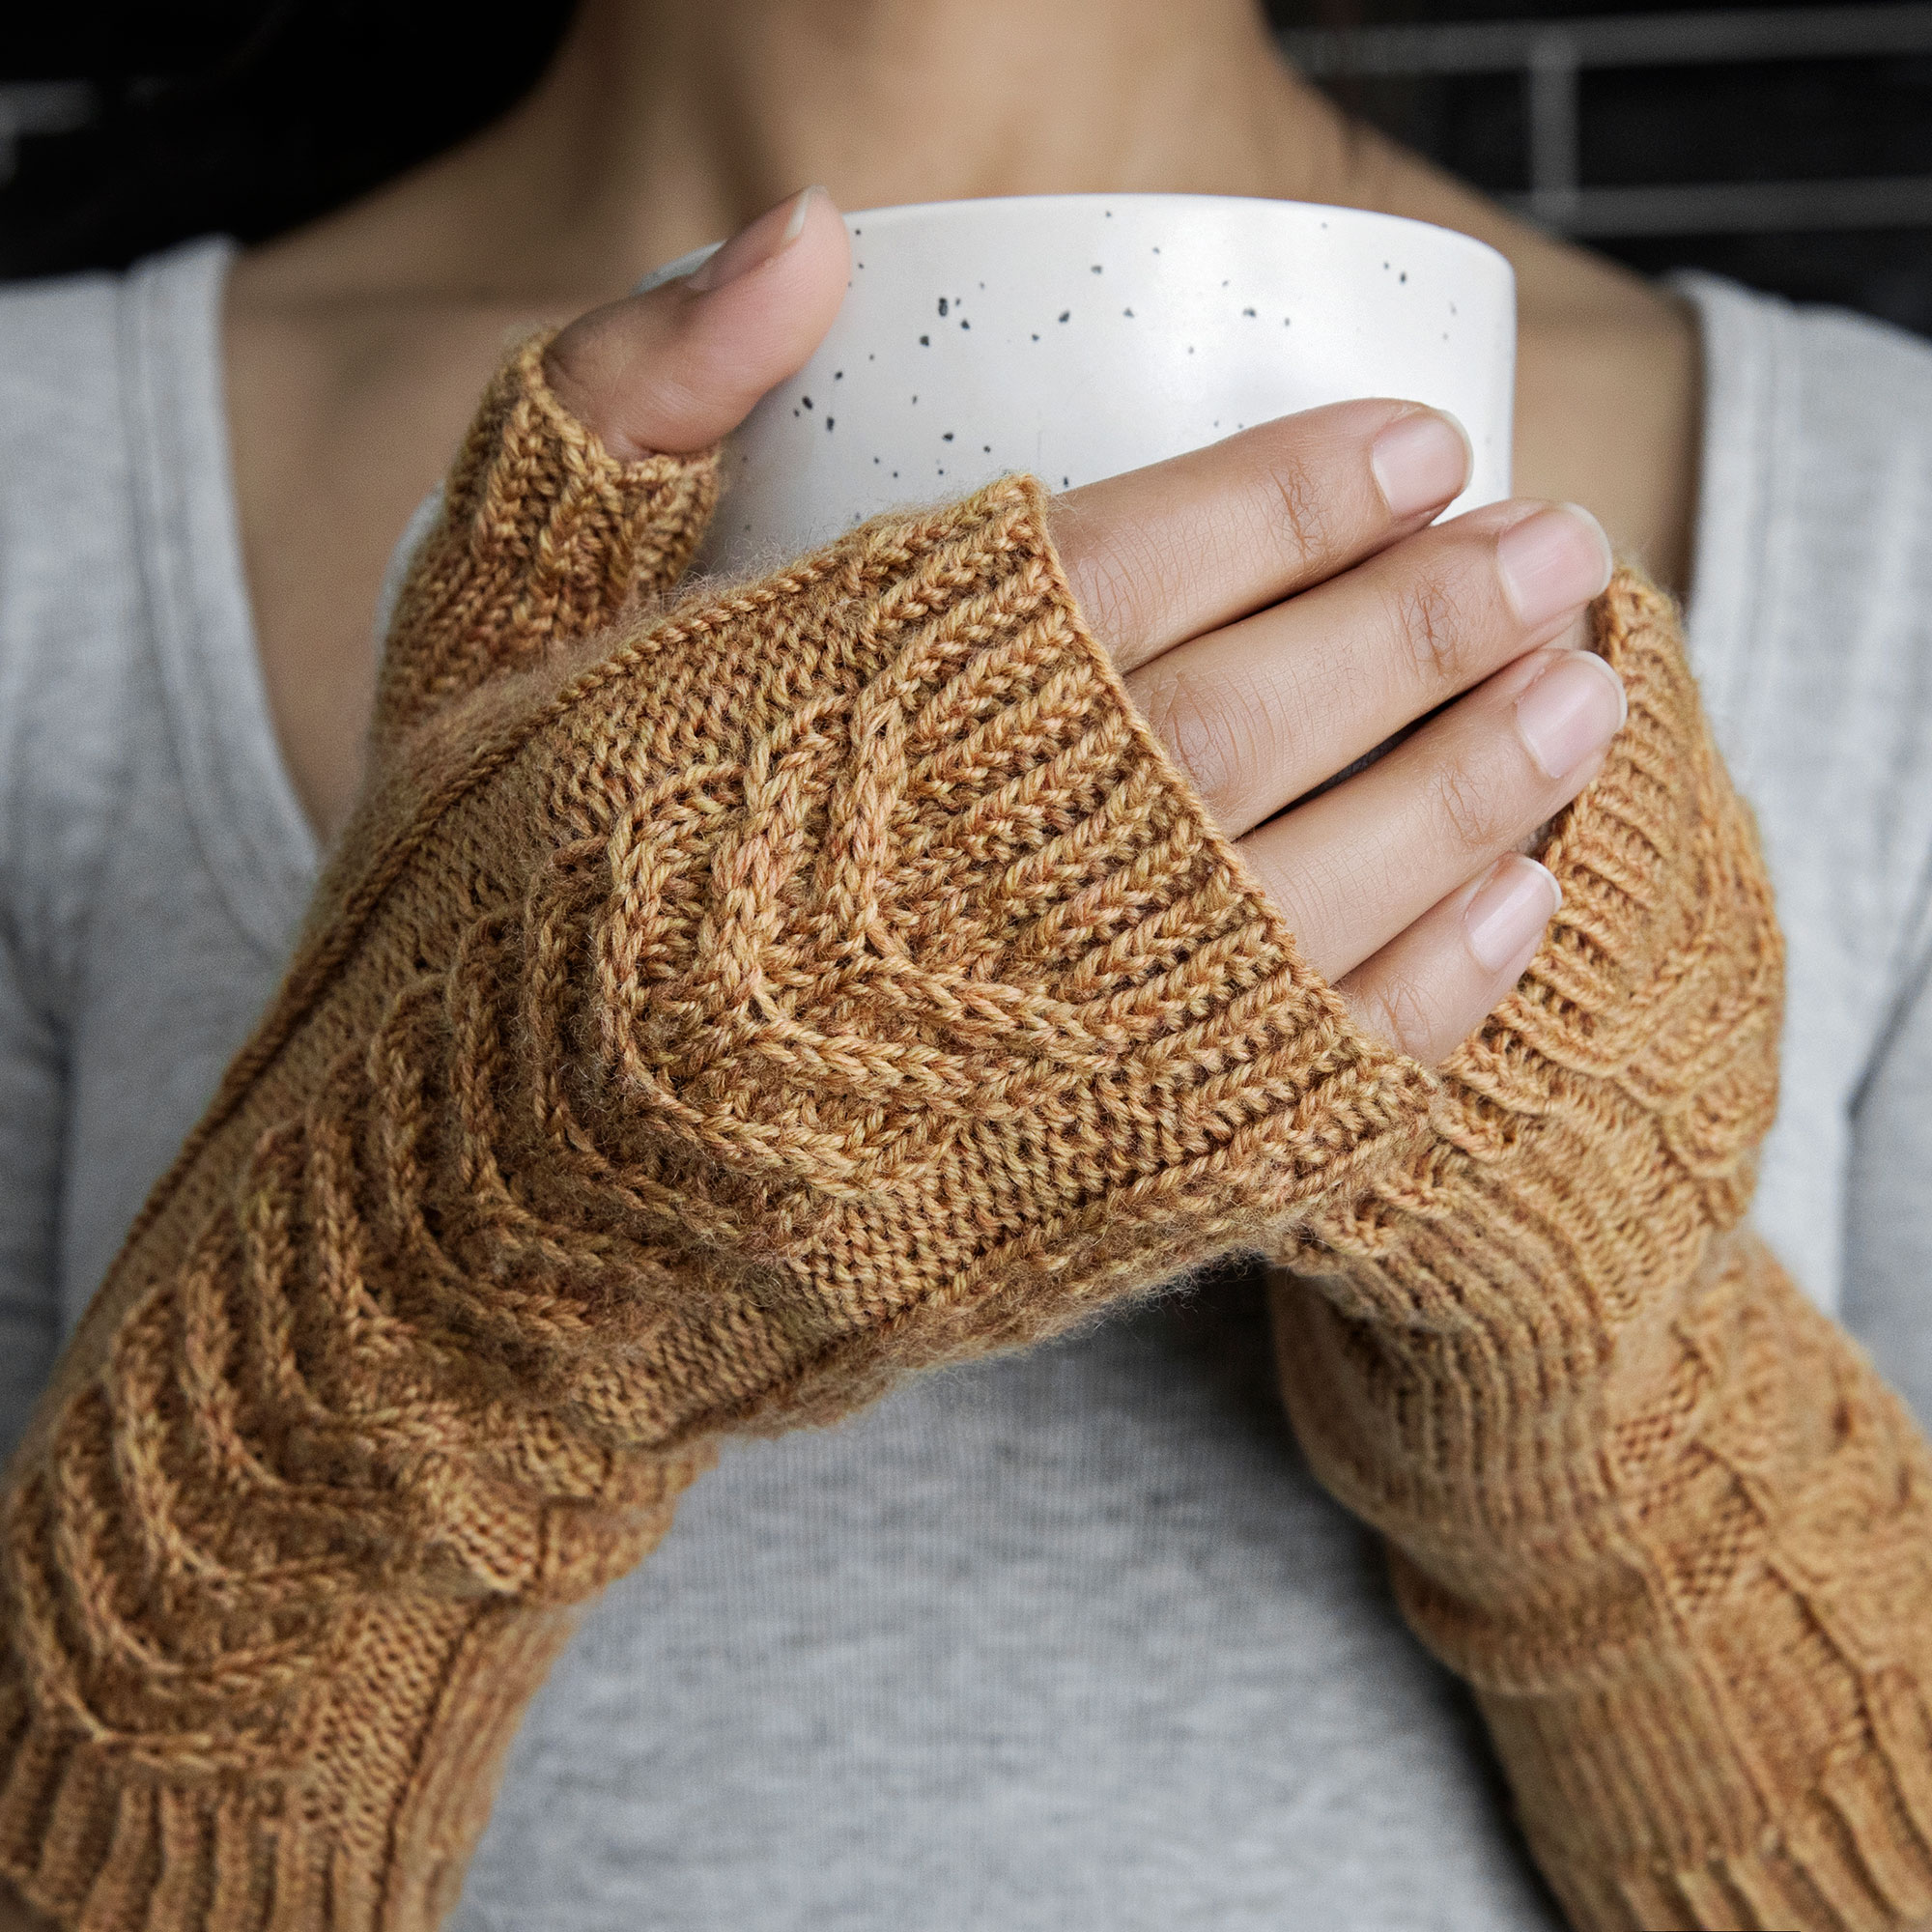 Wrist Warmers - Free Hand Knitting pattern - aran weight wrist warmers